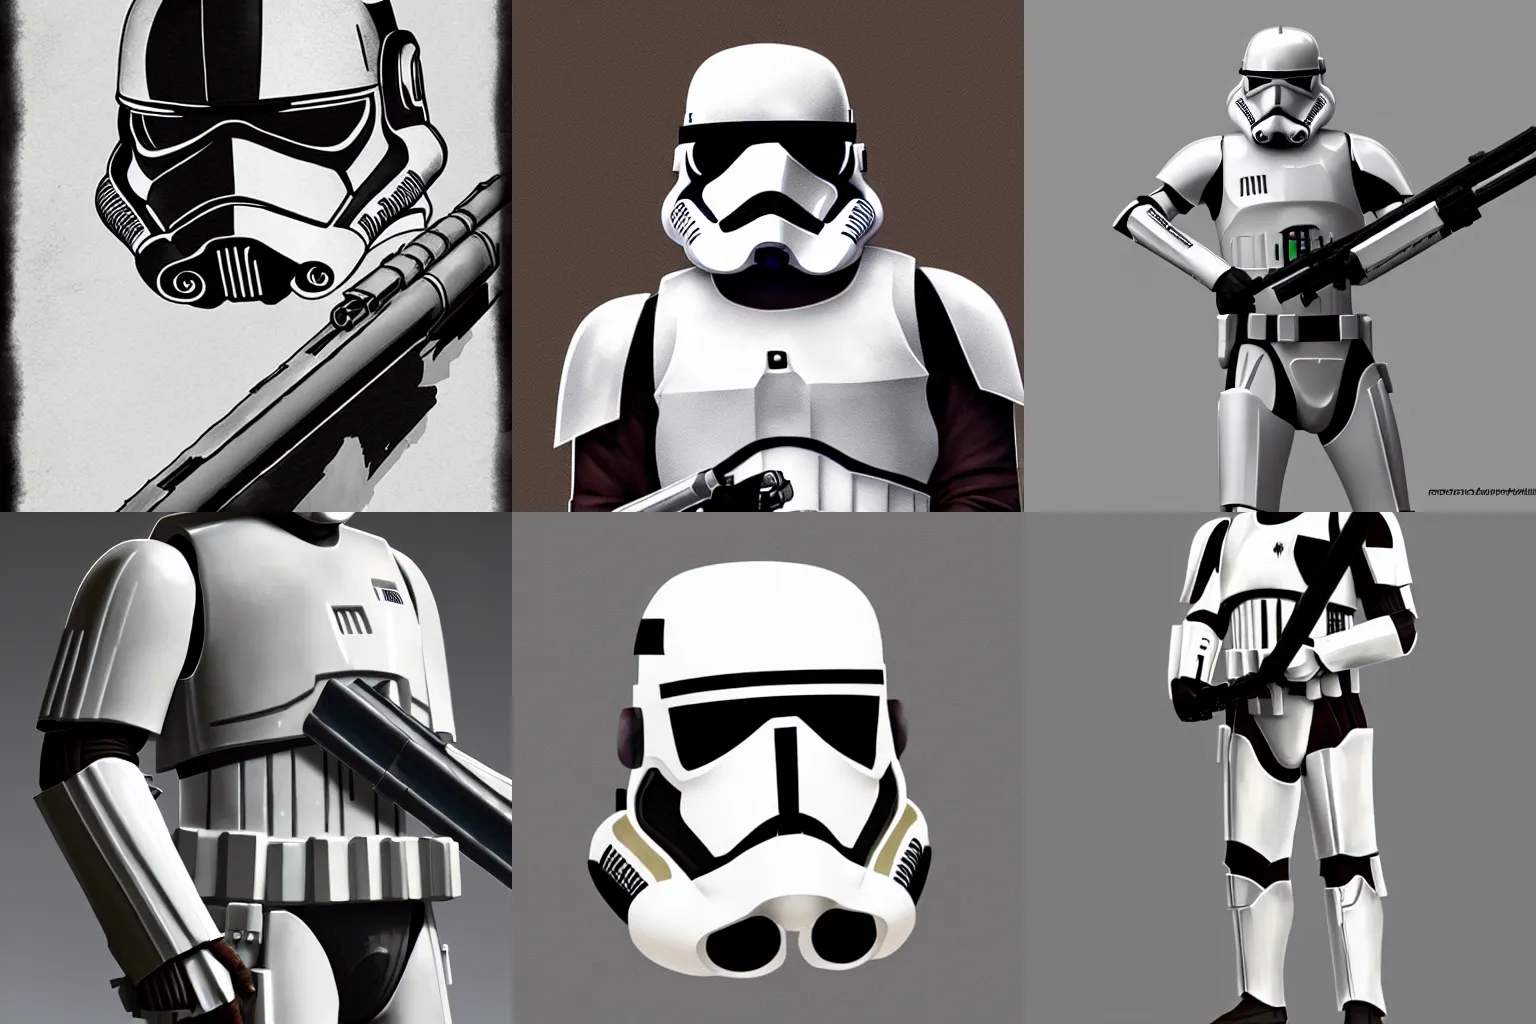 Prompt: clone trooper with lightsaber, star wars, trending on artstation, highly detailed